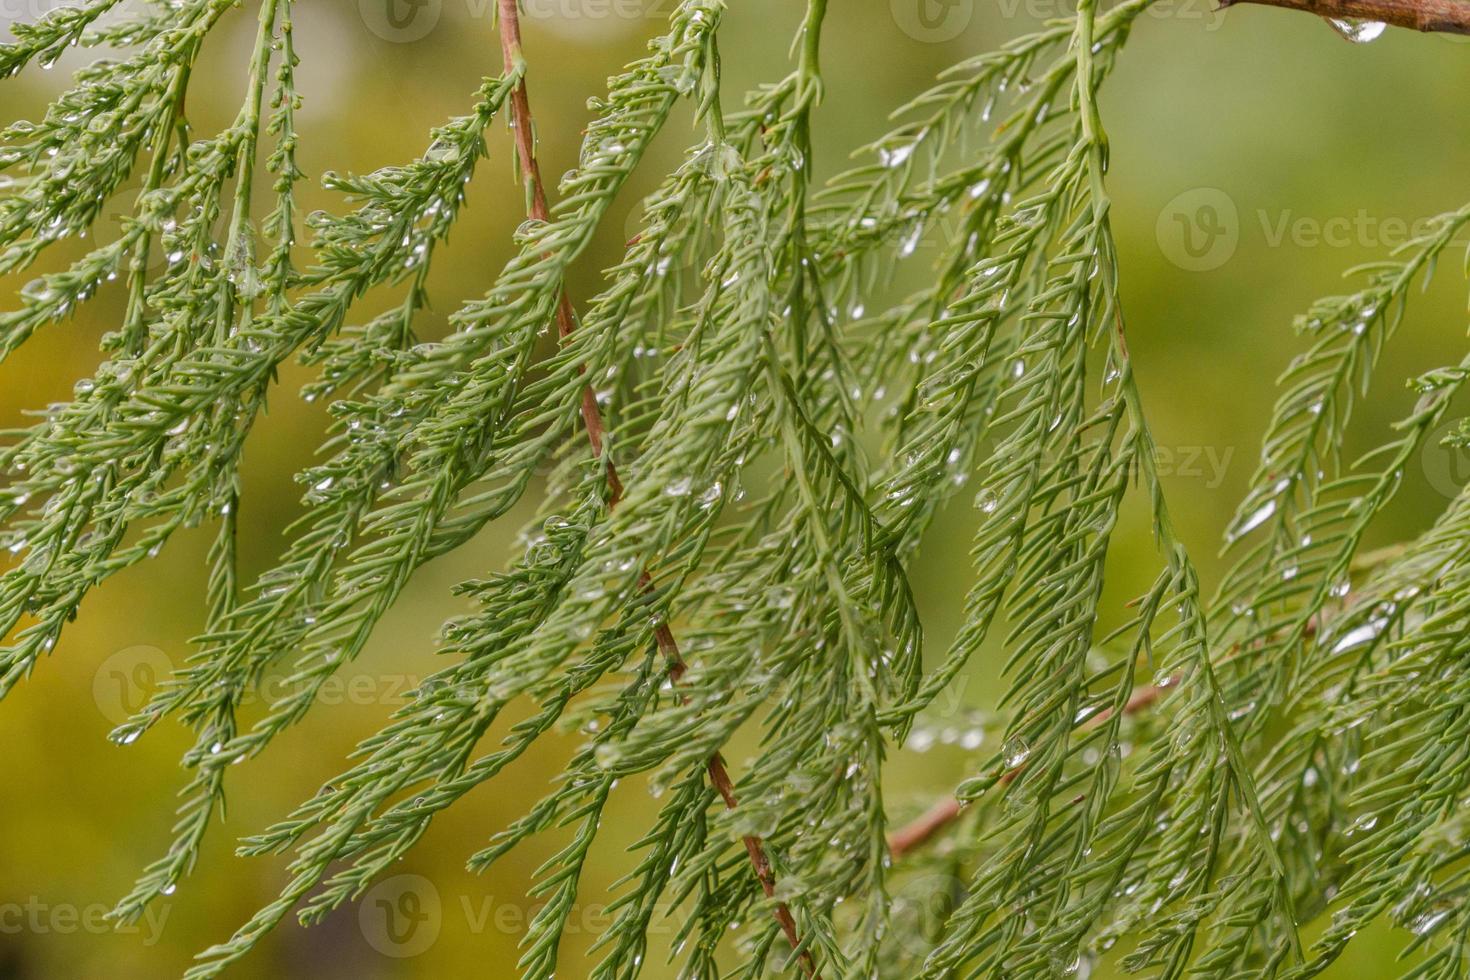 primer plano de las gotas de lluvia en un ciprés calvo. foto